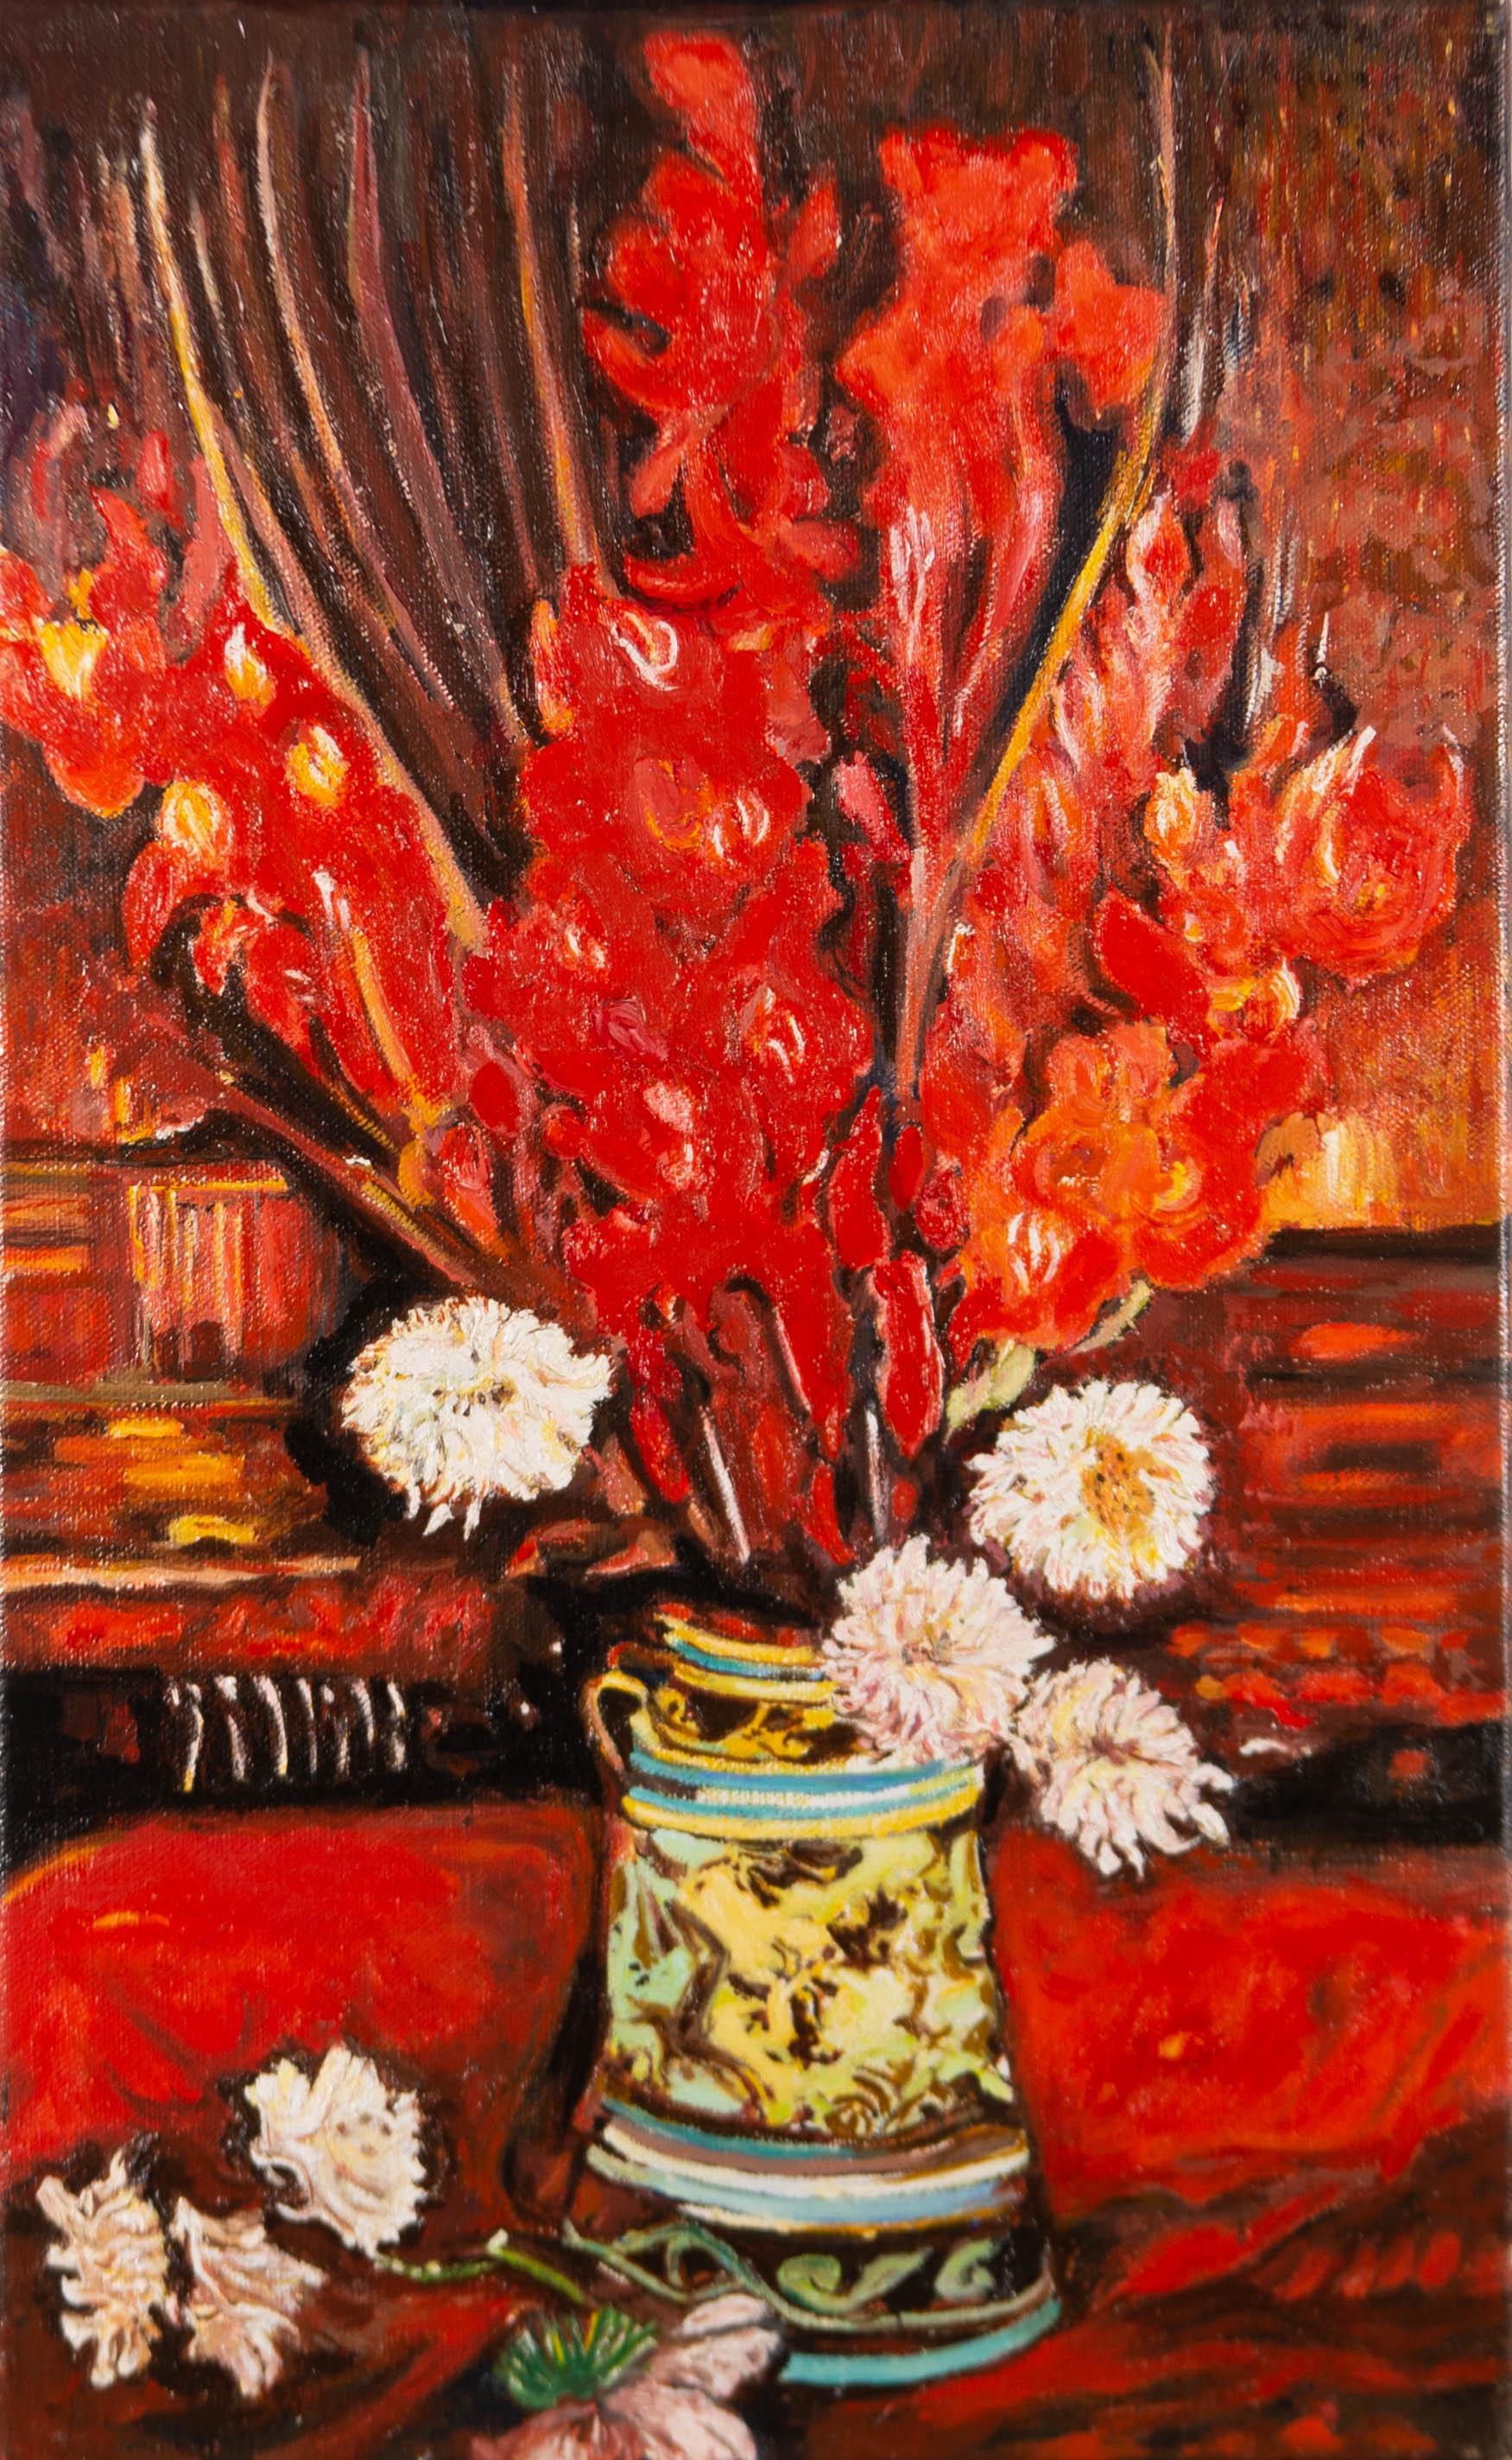 Lewis MacLeod d'après Van Gough - 2003 Huile, vase avec Gladioli rouge - Painting de Lewis MacLeod After Van Gough